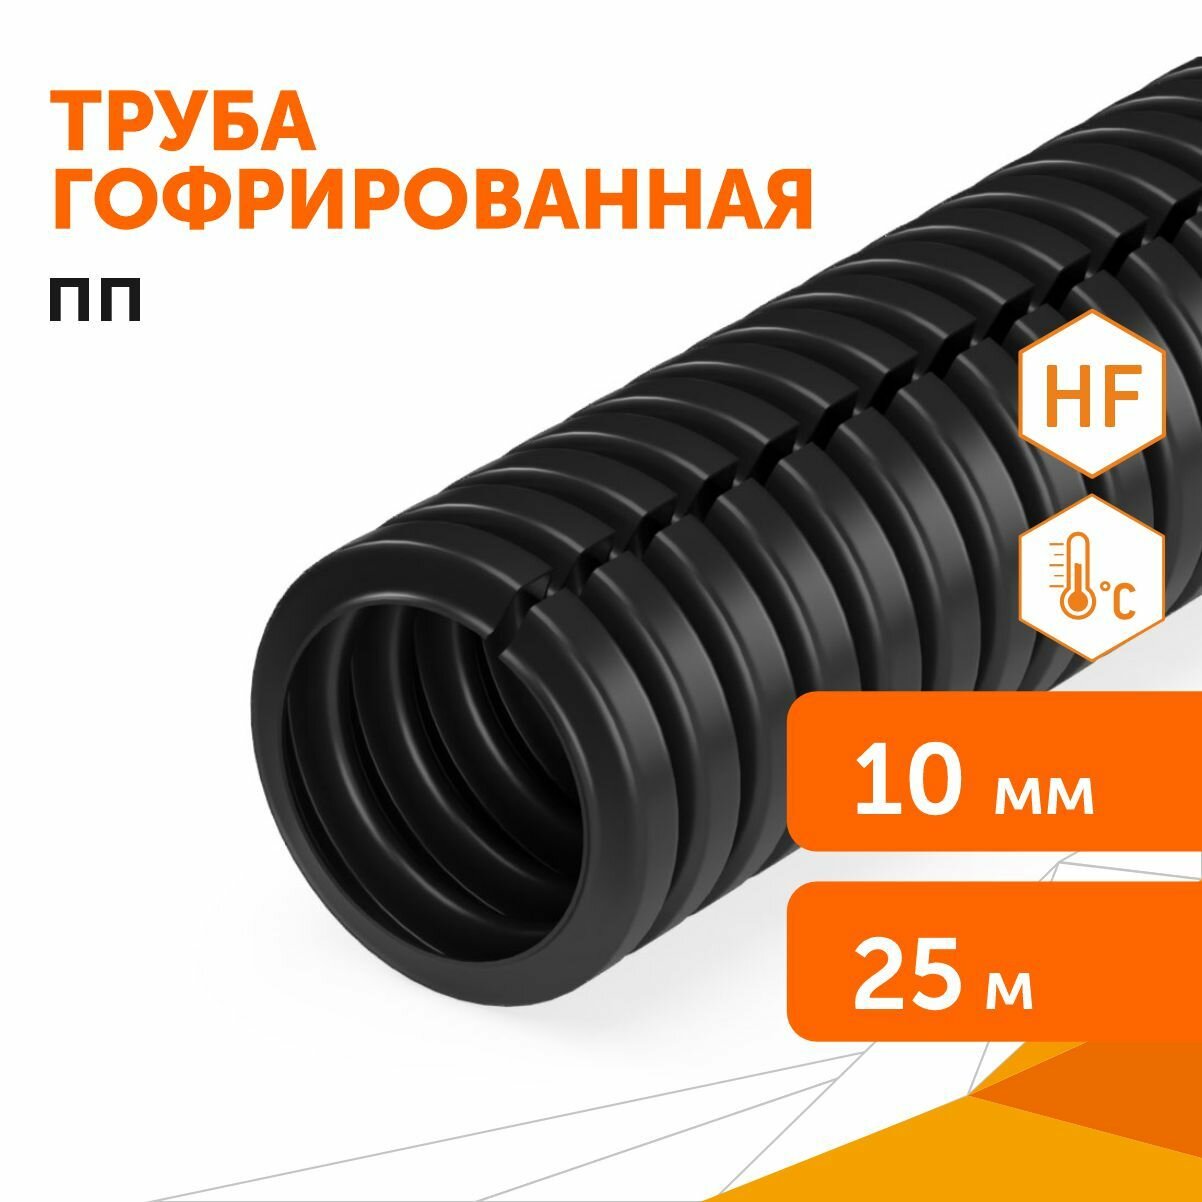 Труба гофрированная ПП безгалогенная (HF) разрезная черная dвн 7,0 мм, dнар 10,0 мм, 25м